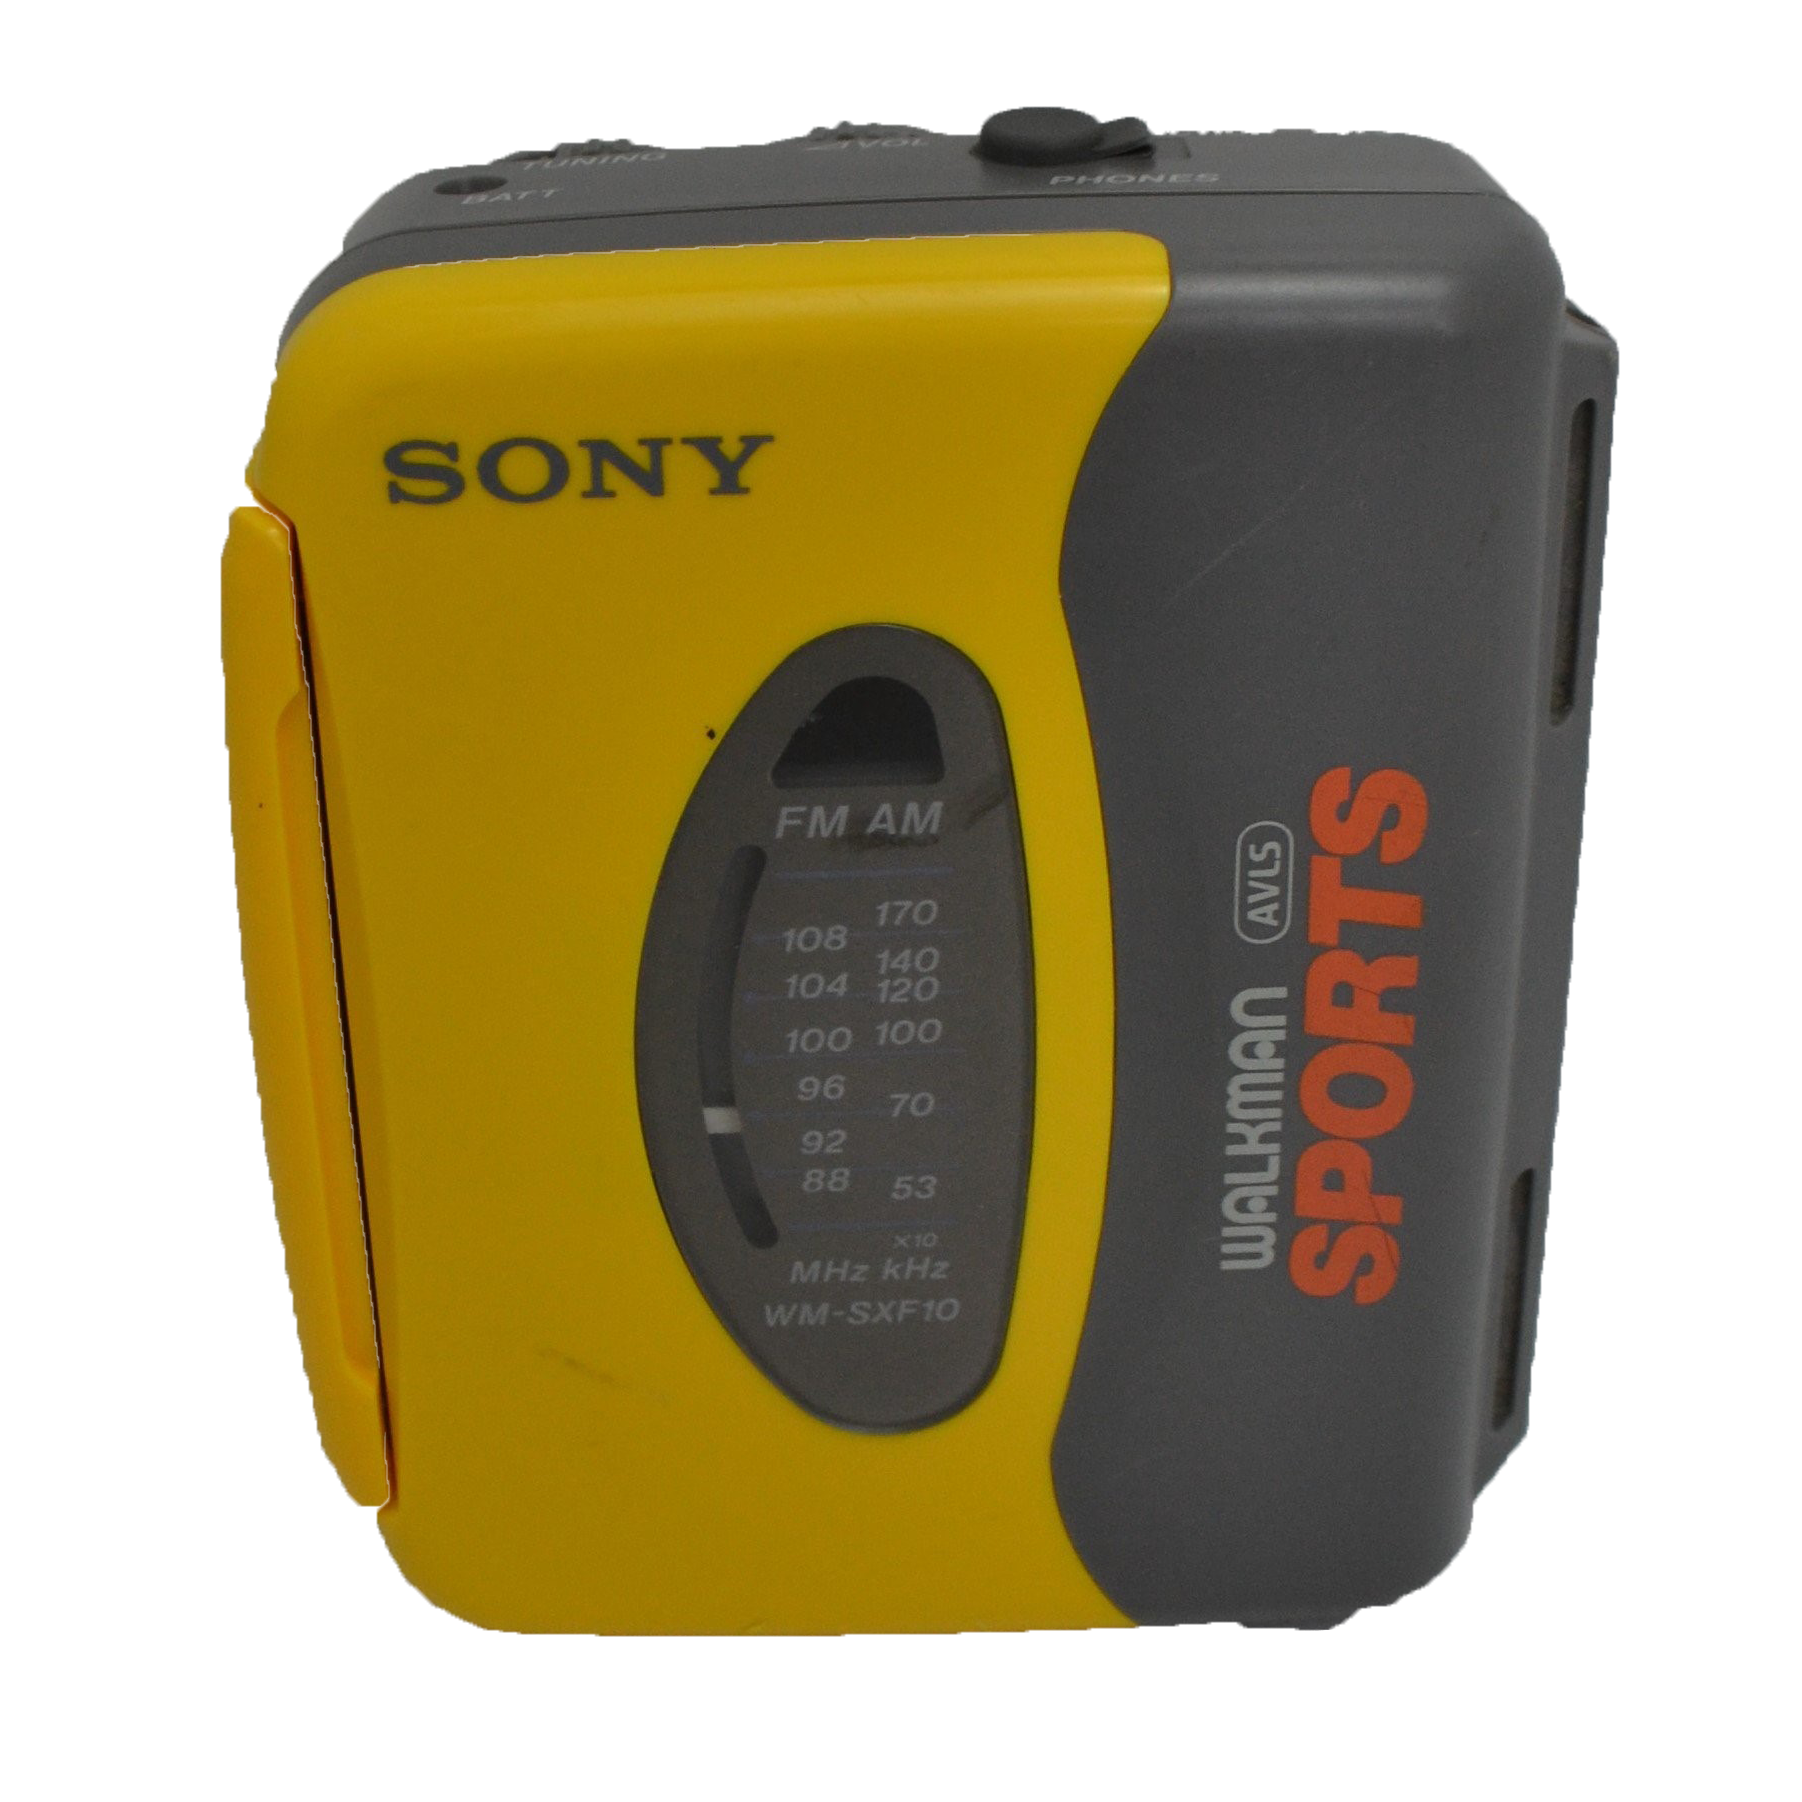 Sony Yellow Walkman Sports Portable Cassette Player and Radio AVLS w/